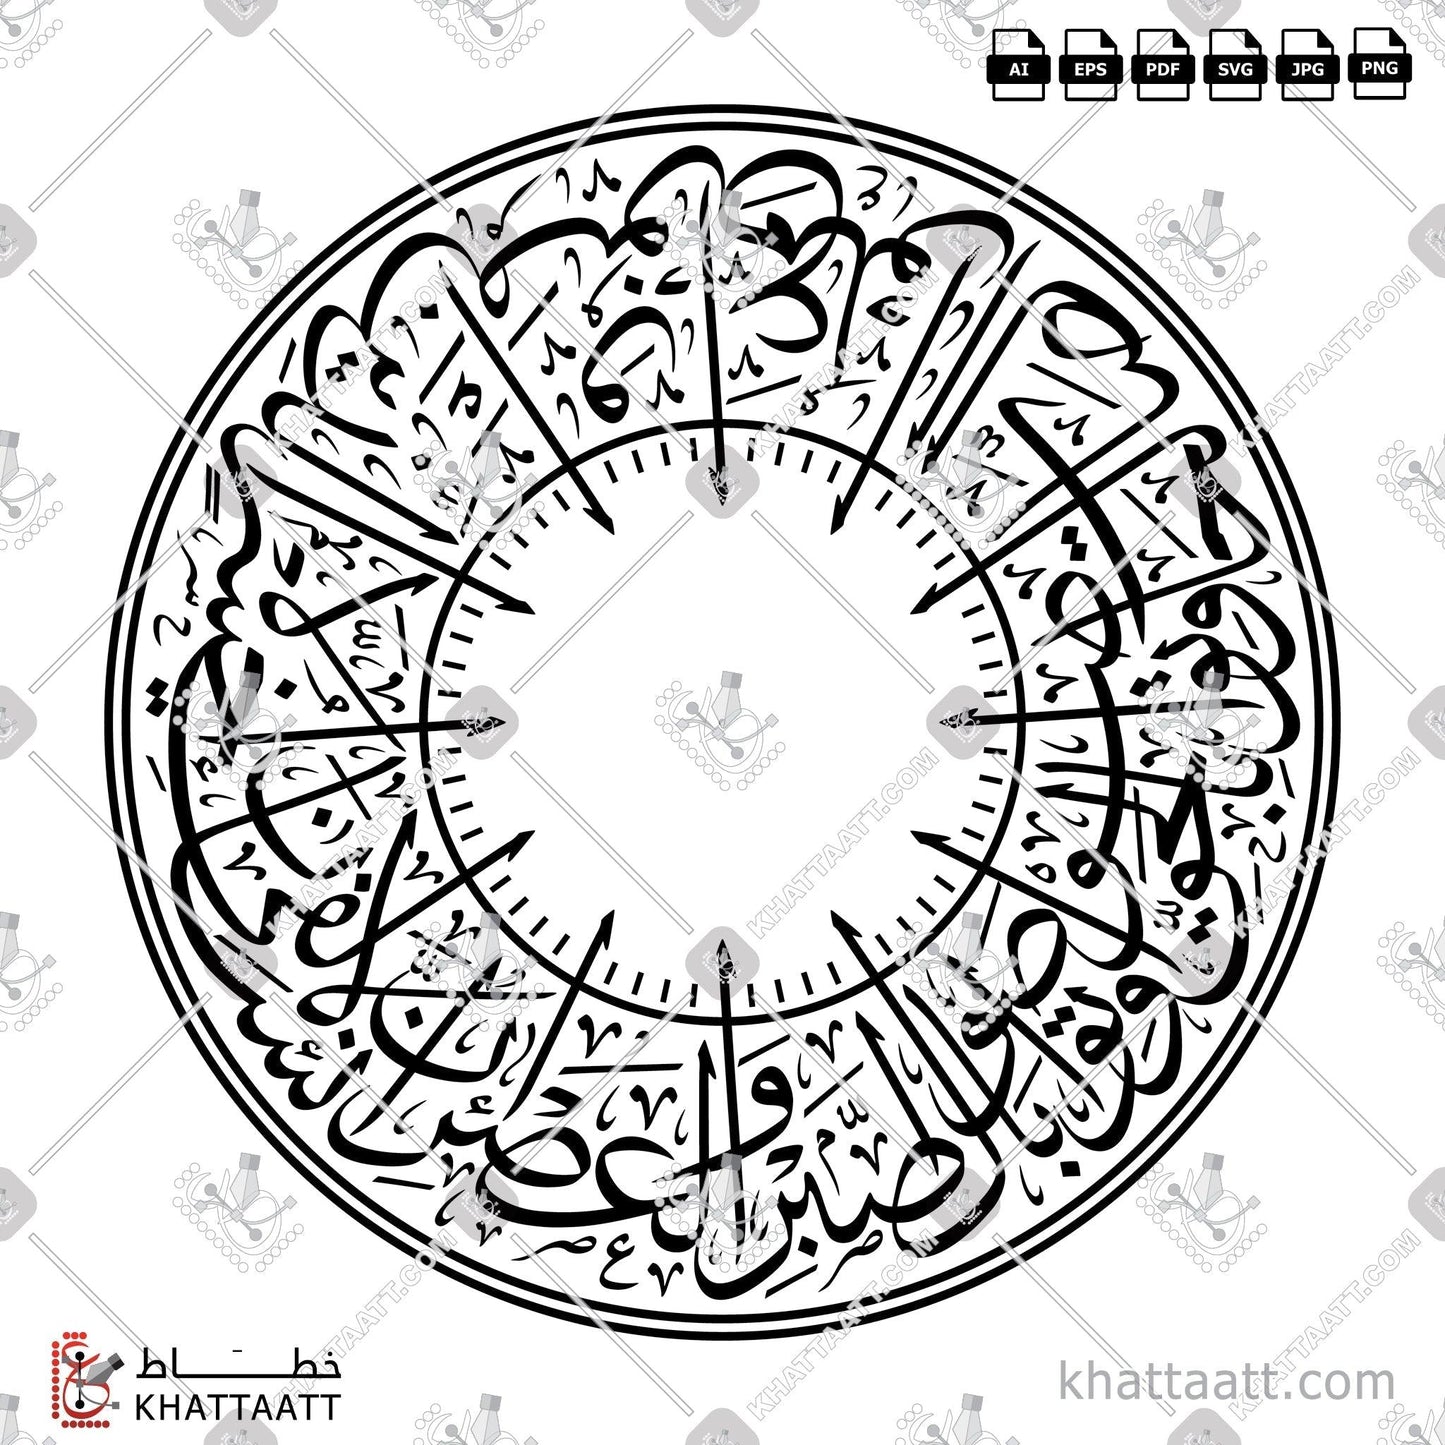 Download Arabic Calligraphy of Surat Al-Asr - سورة العصر in Thuluth - خط الثلث in vector and .png